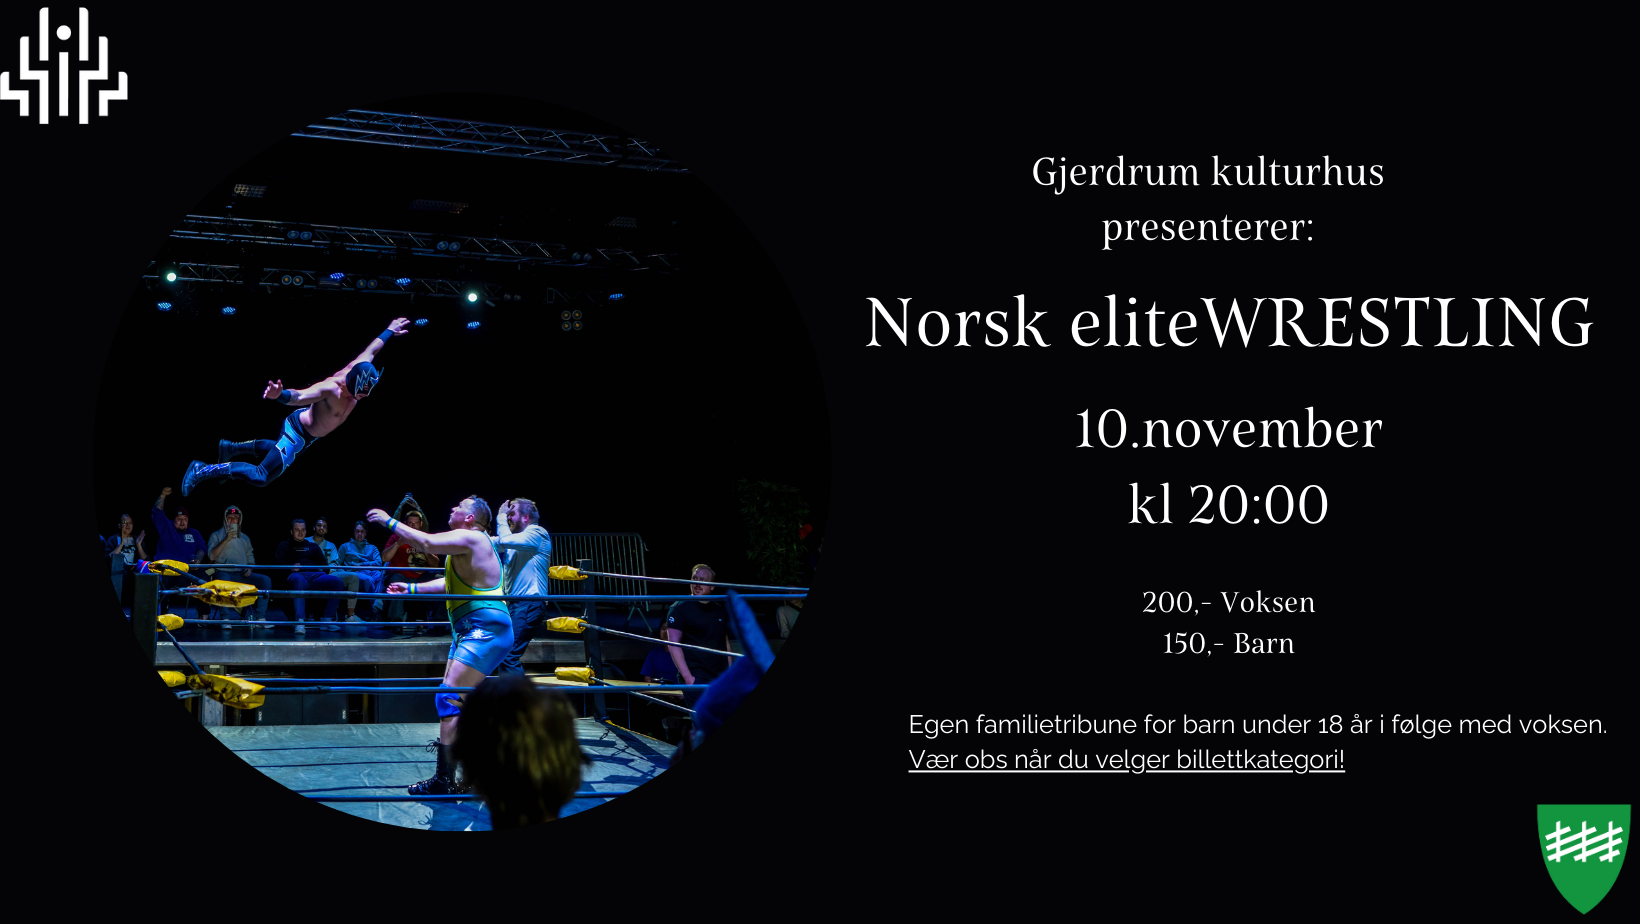 Plakat til Gjerdrum kulturhus presenterer: Norsk eliteWRESTLING